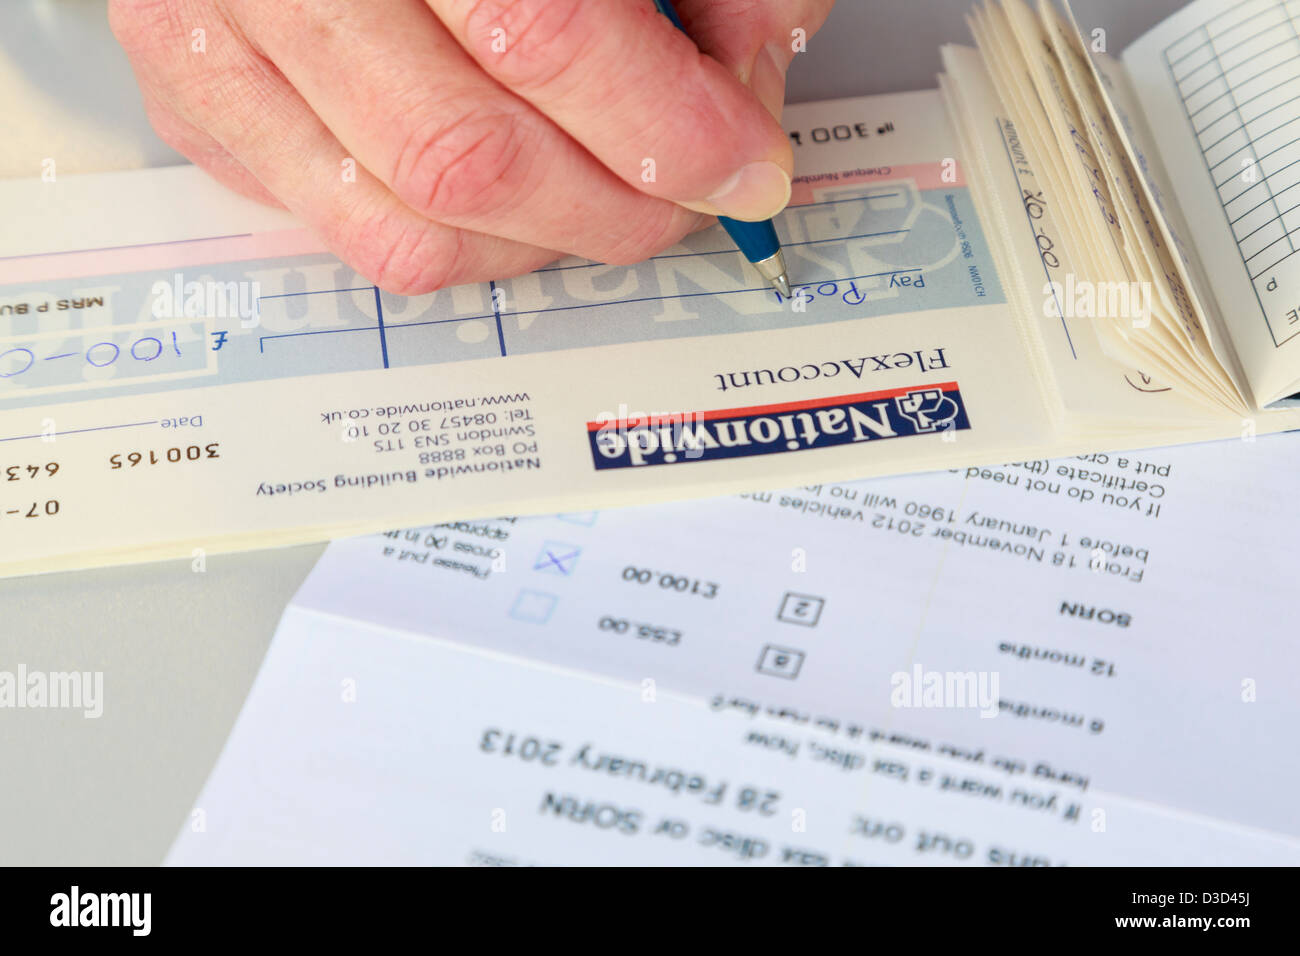 Persona del sexo femenino escribir un cheque para pagar en todo el país durante 12 meses coche renovación fiscal en la oficina de correos. Inglaterra Gran Bretaña Foto de stock